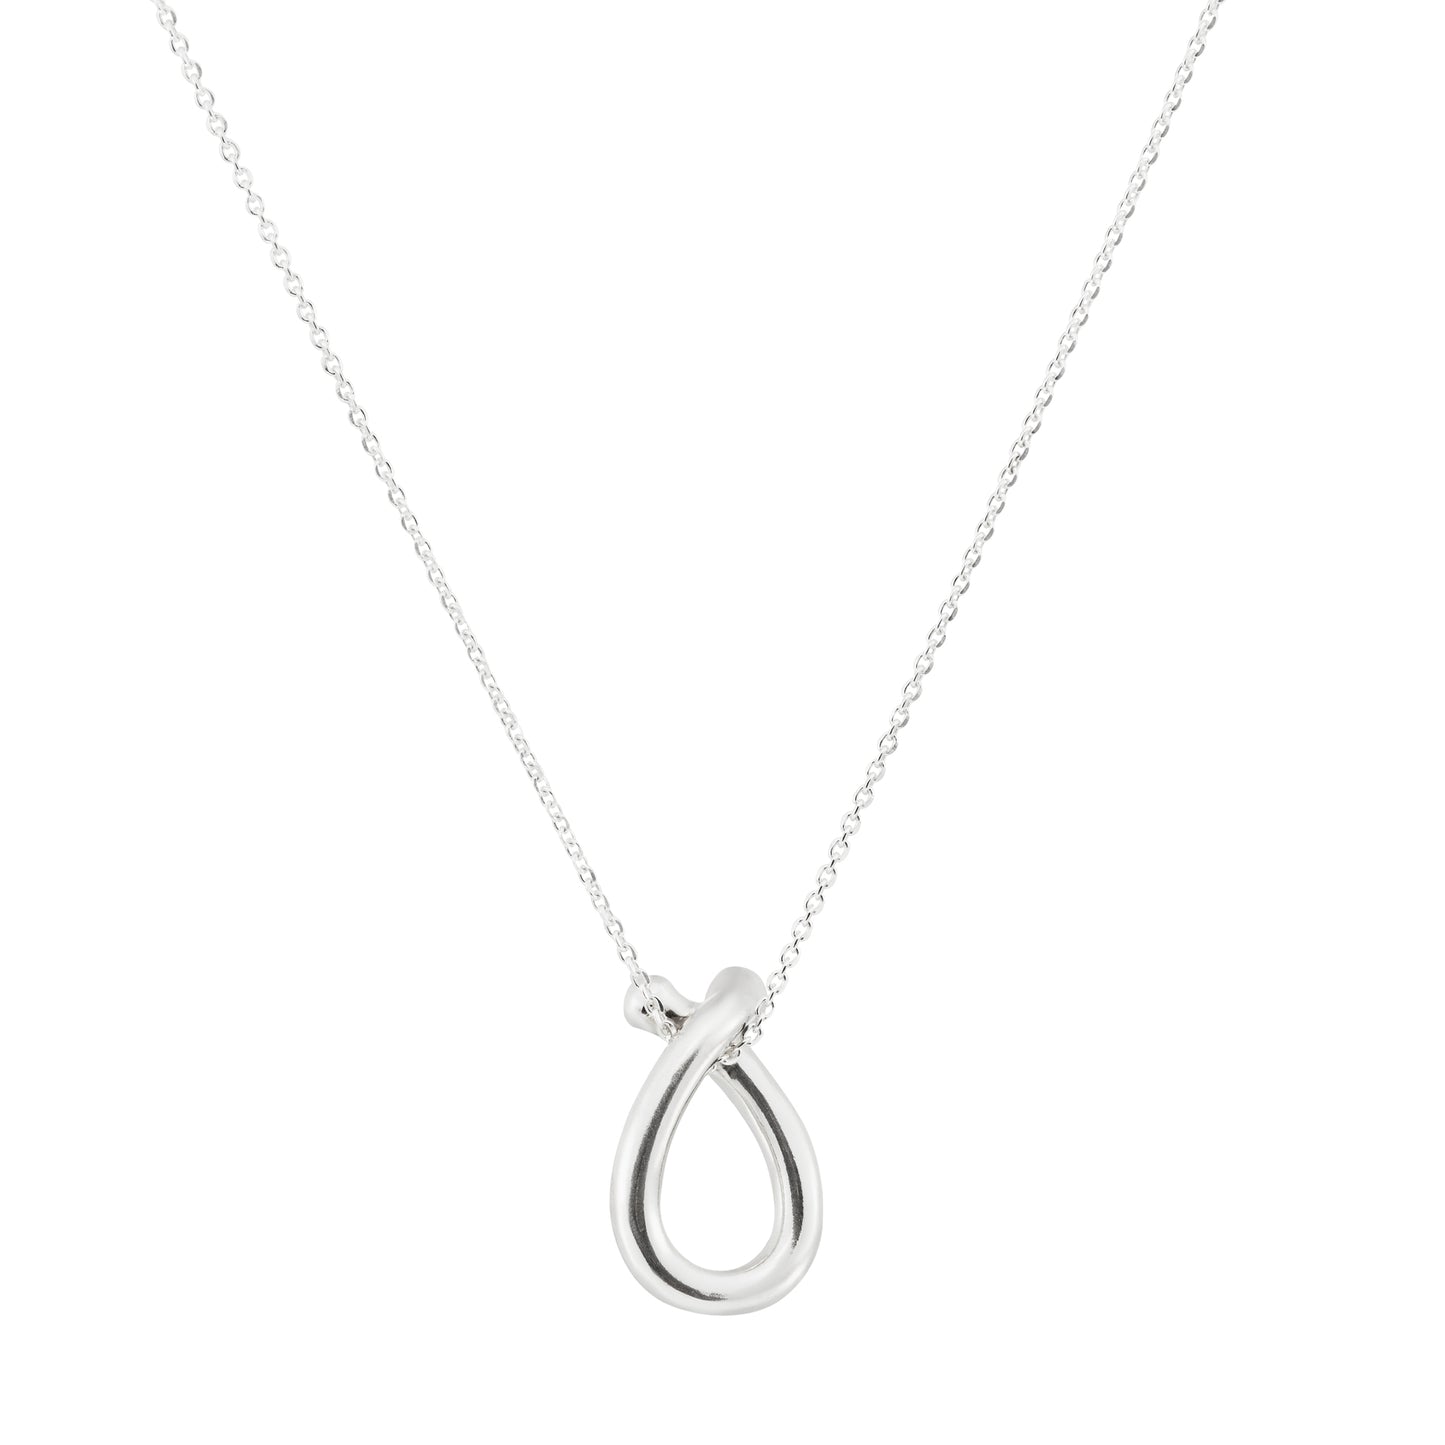 Loop Silver Necklace Small